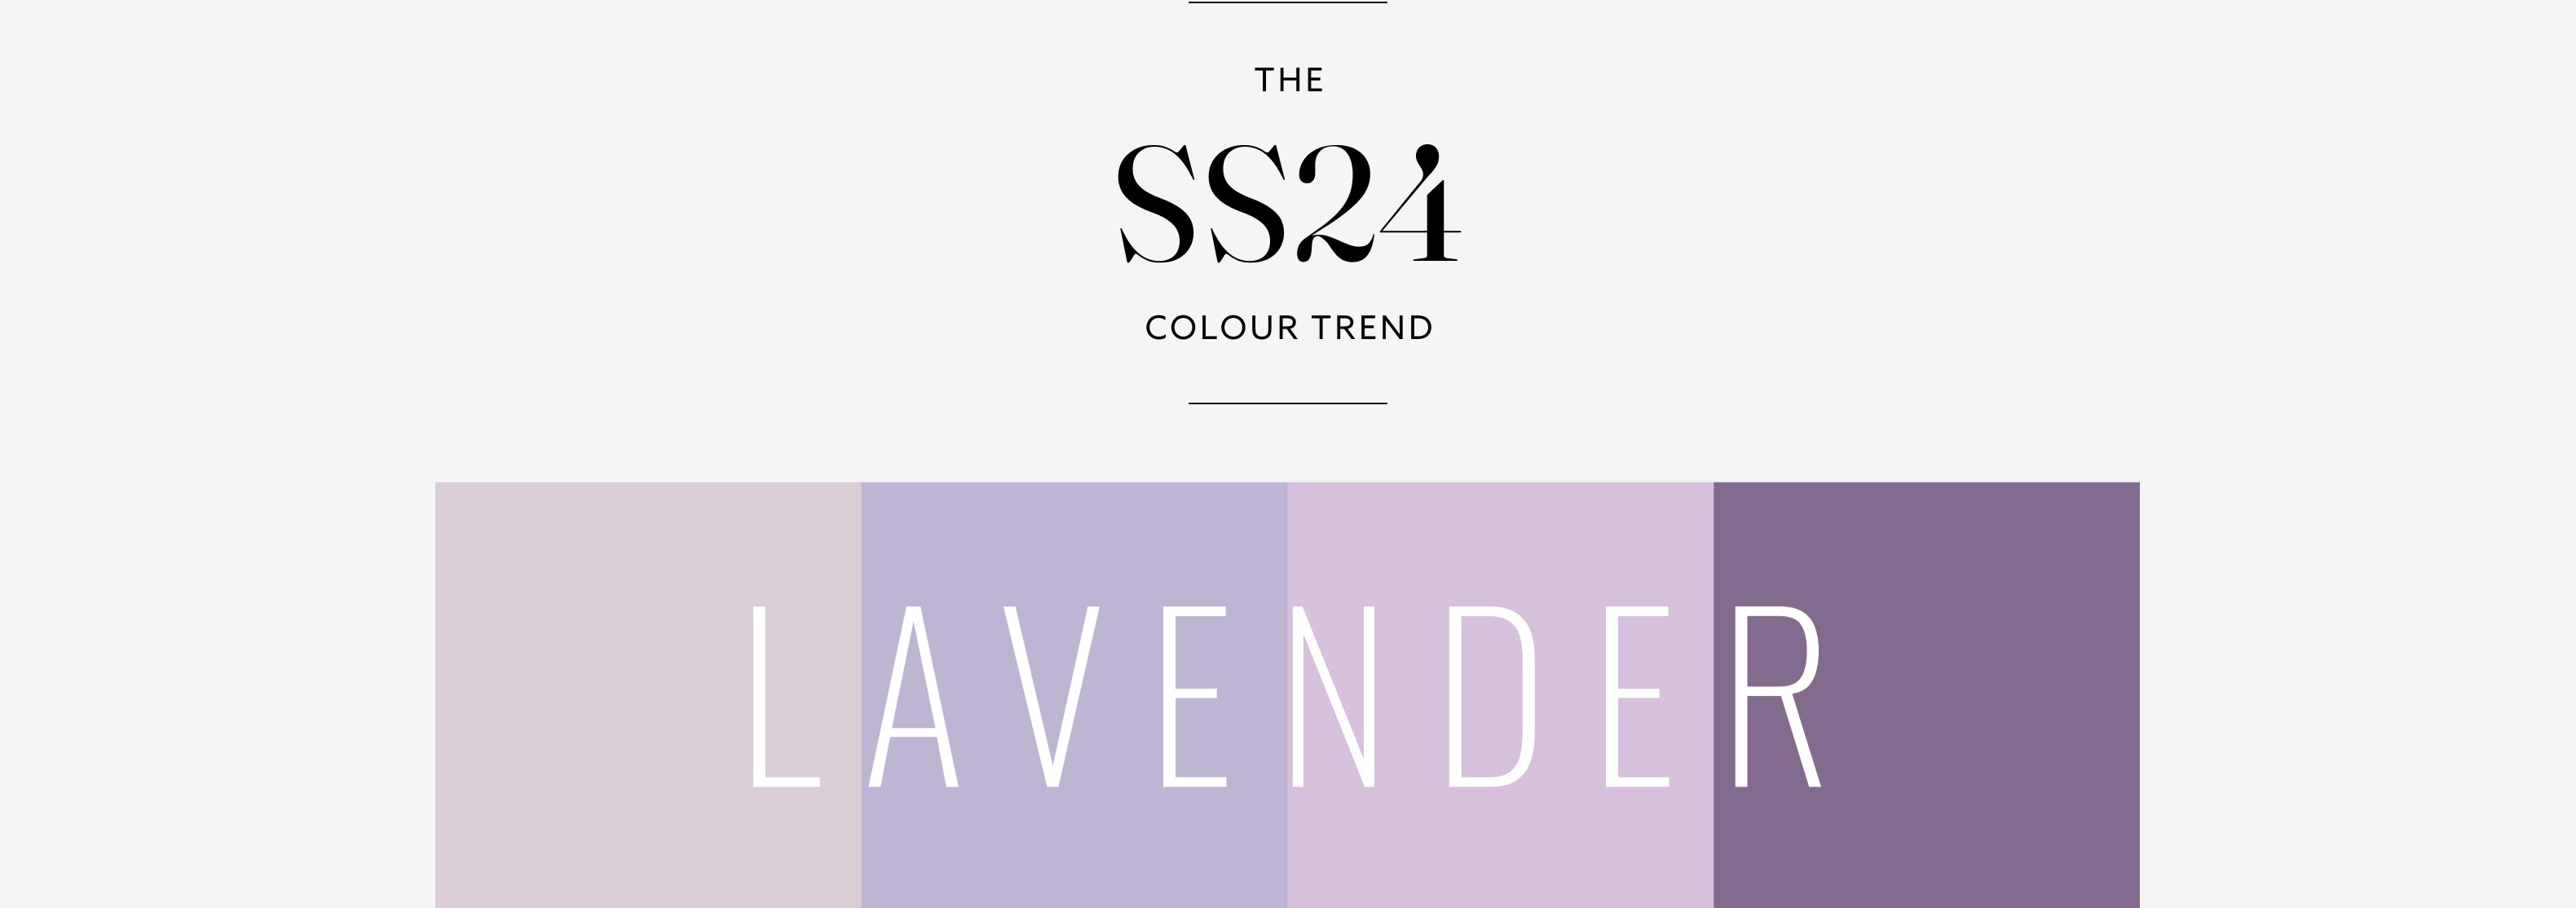 The SS24 Colour Trend - Lavender